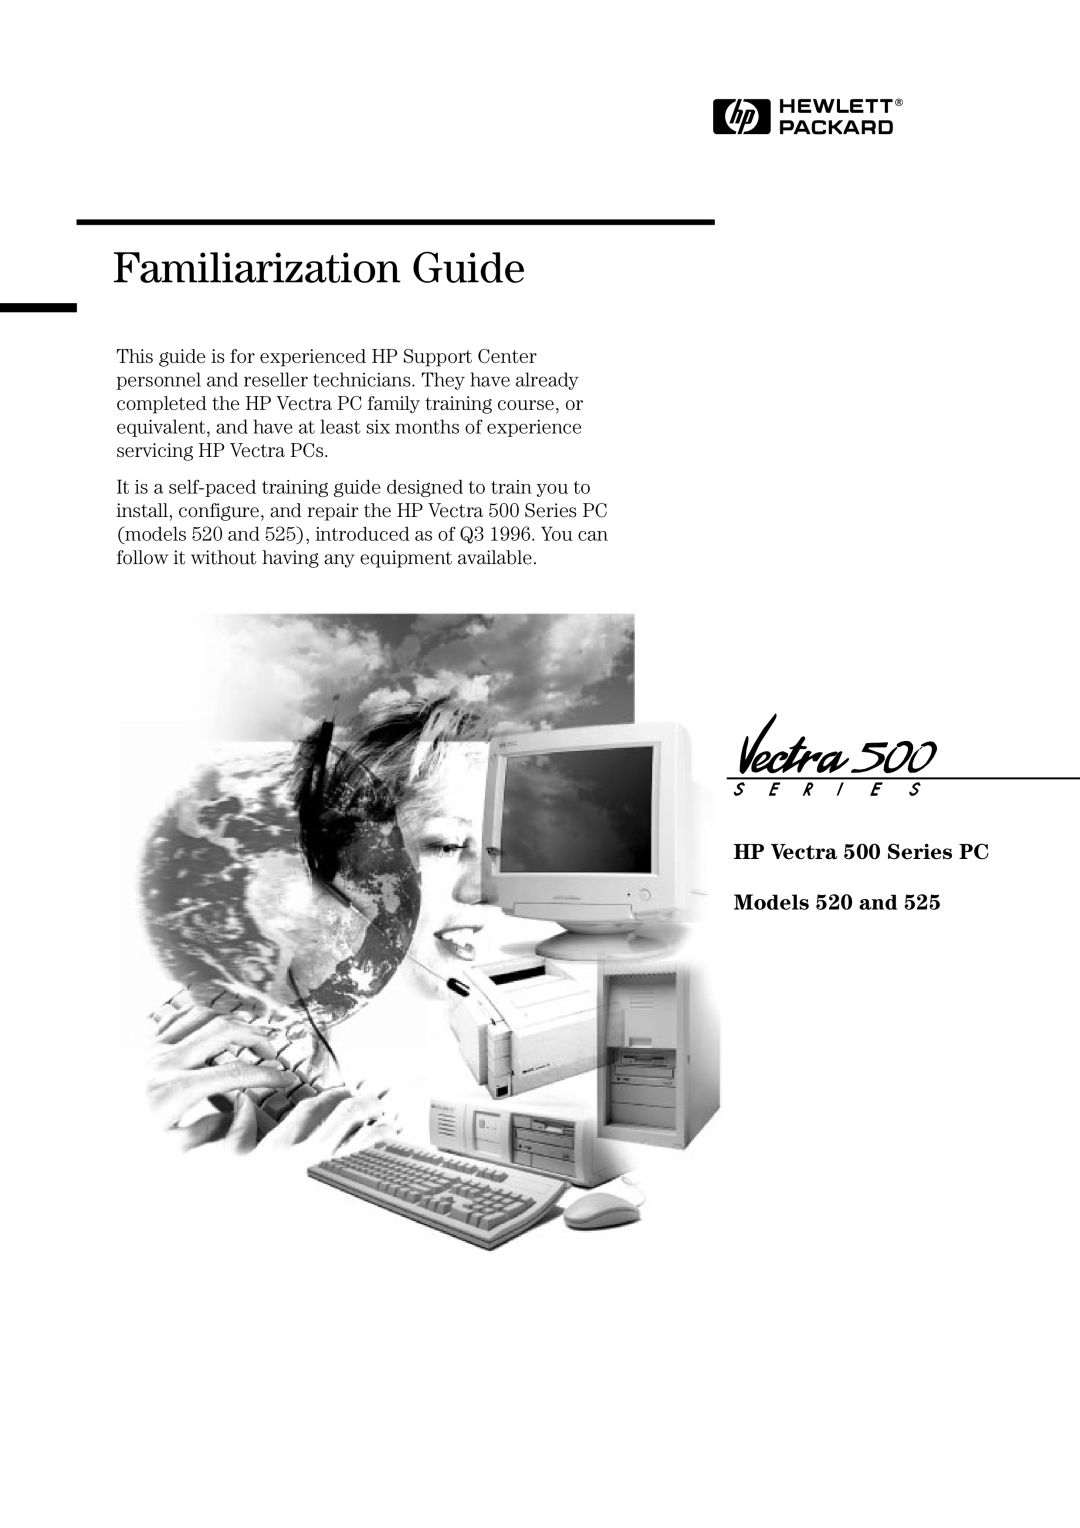 Verbatim 525 manual Familiarization Guide, HP Vectra 500 Series PC Models 520 and 